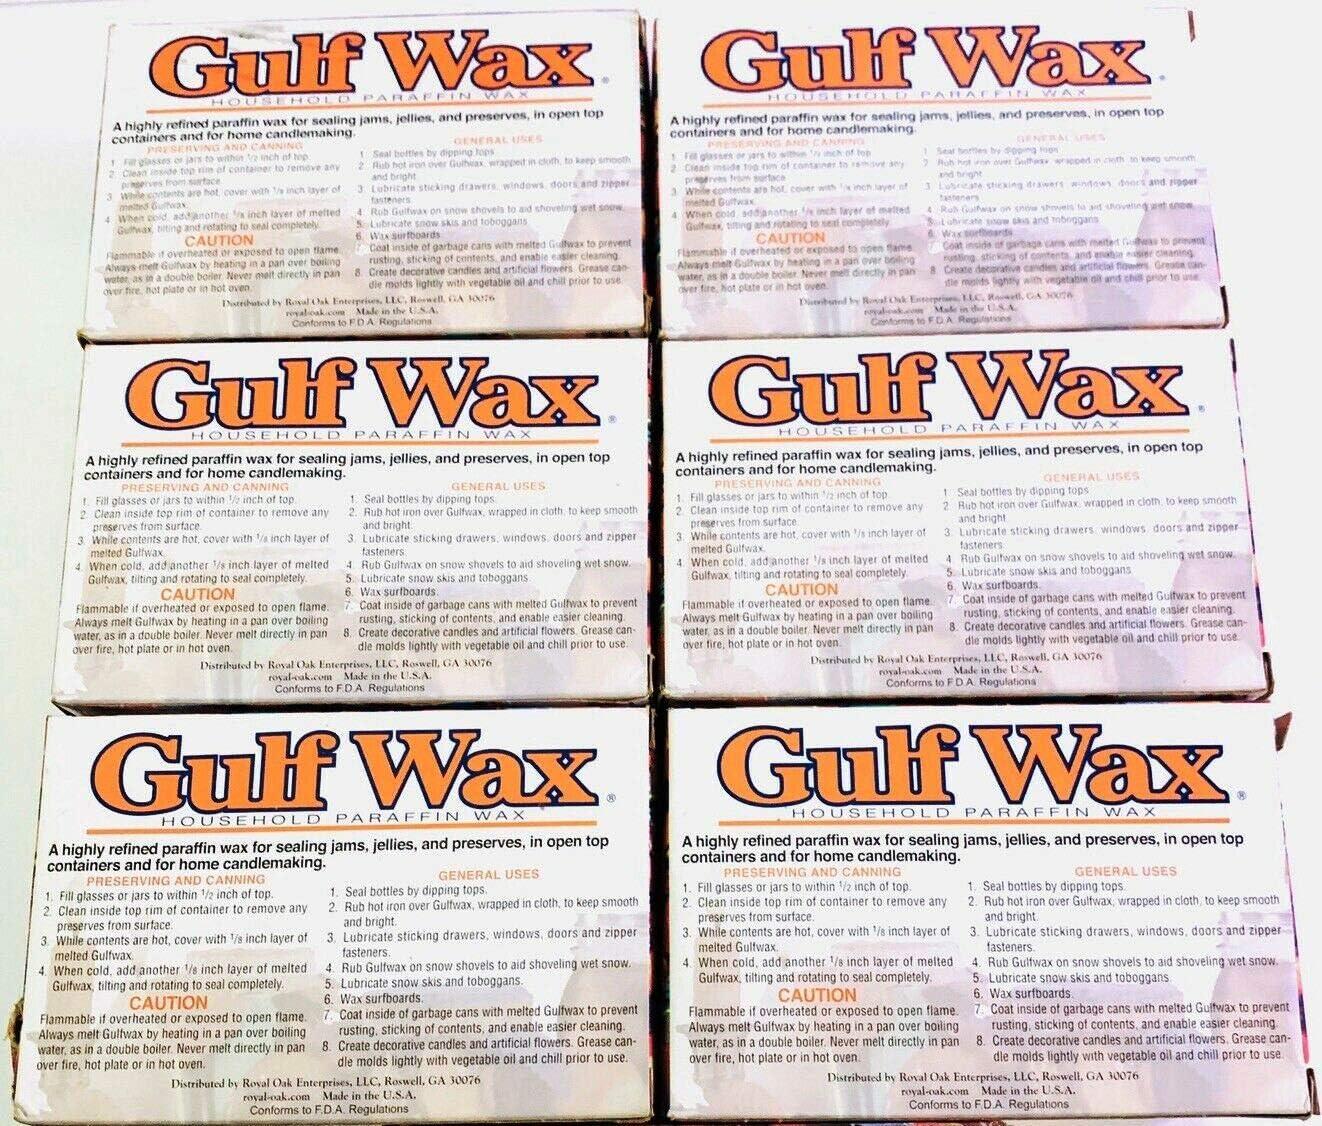 Gulf Wax Household Paraffin Wax 1 Pound Bars (6 Packs)